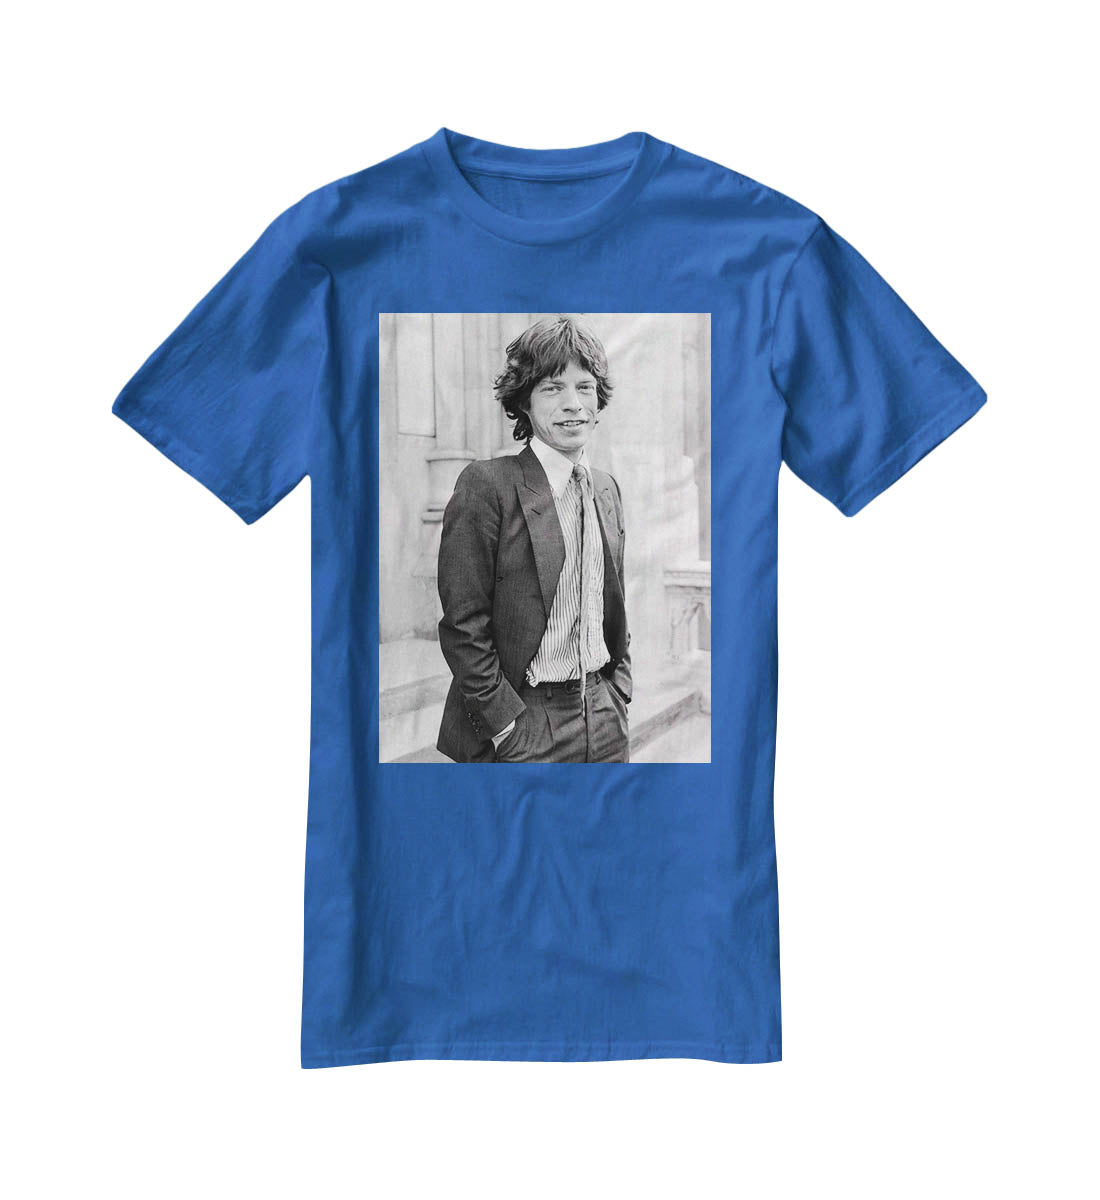 Mick Jagger in a tie T-Shirt - Canvas Art Rocks - 2